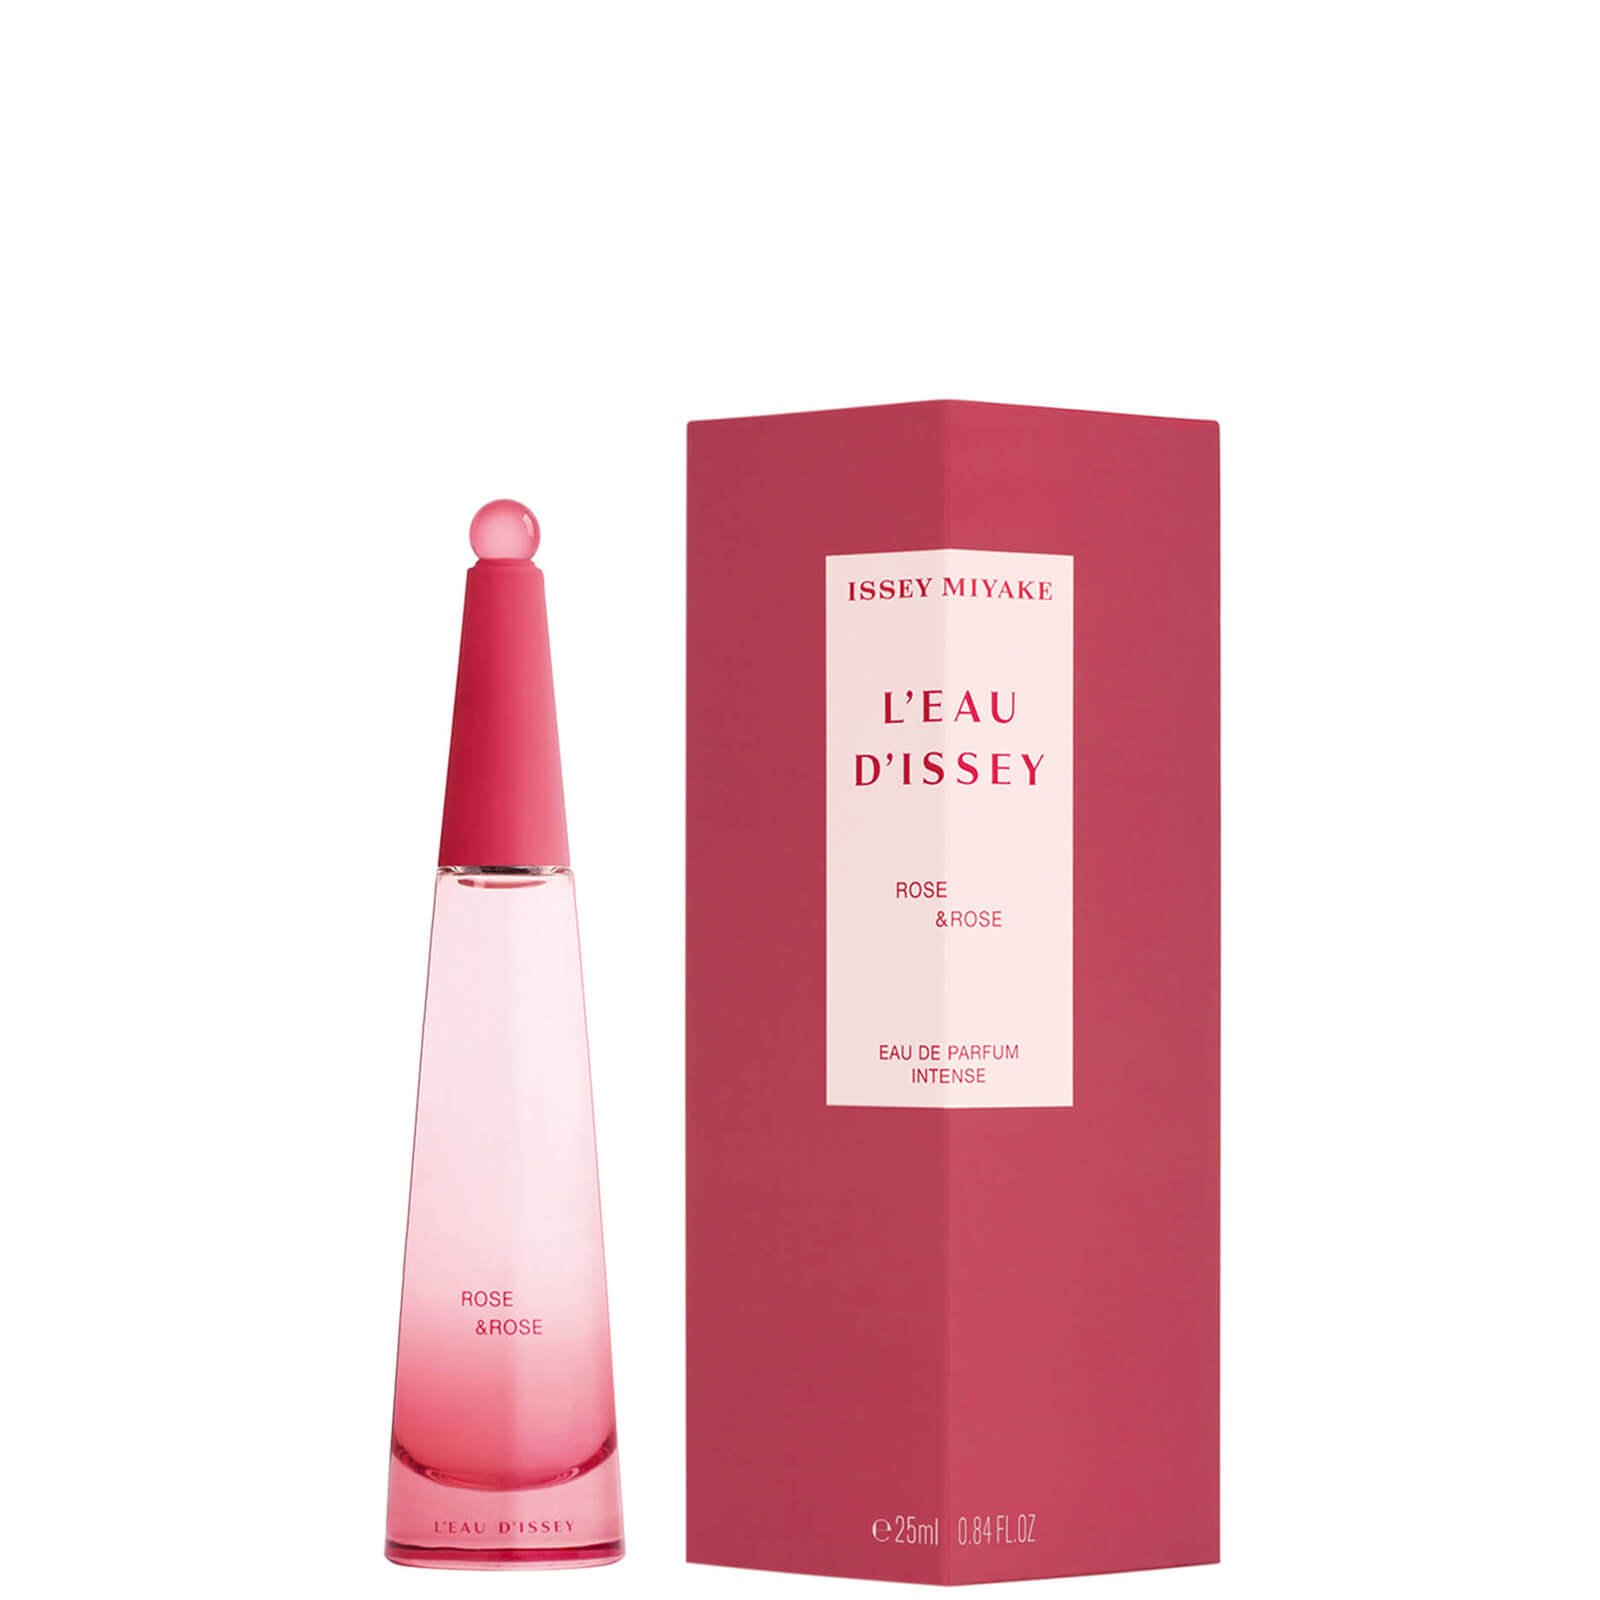 Issey Miyake L'eau D'Issey Rose & Rose Eau de Parfum Intense - 25ml